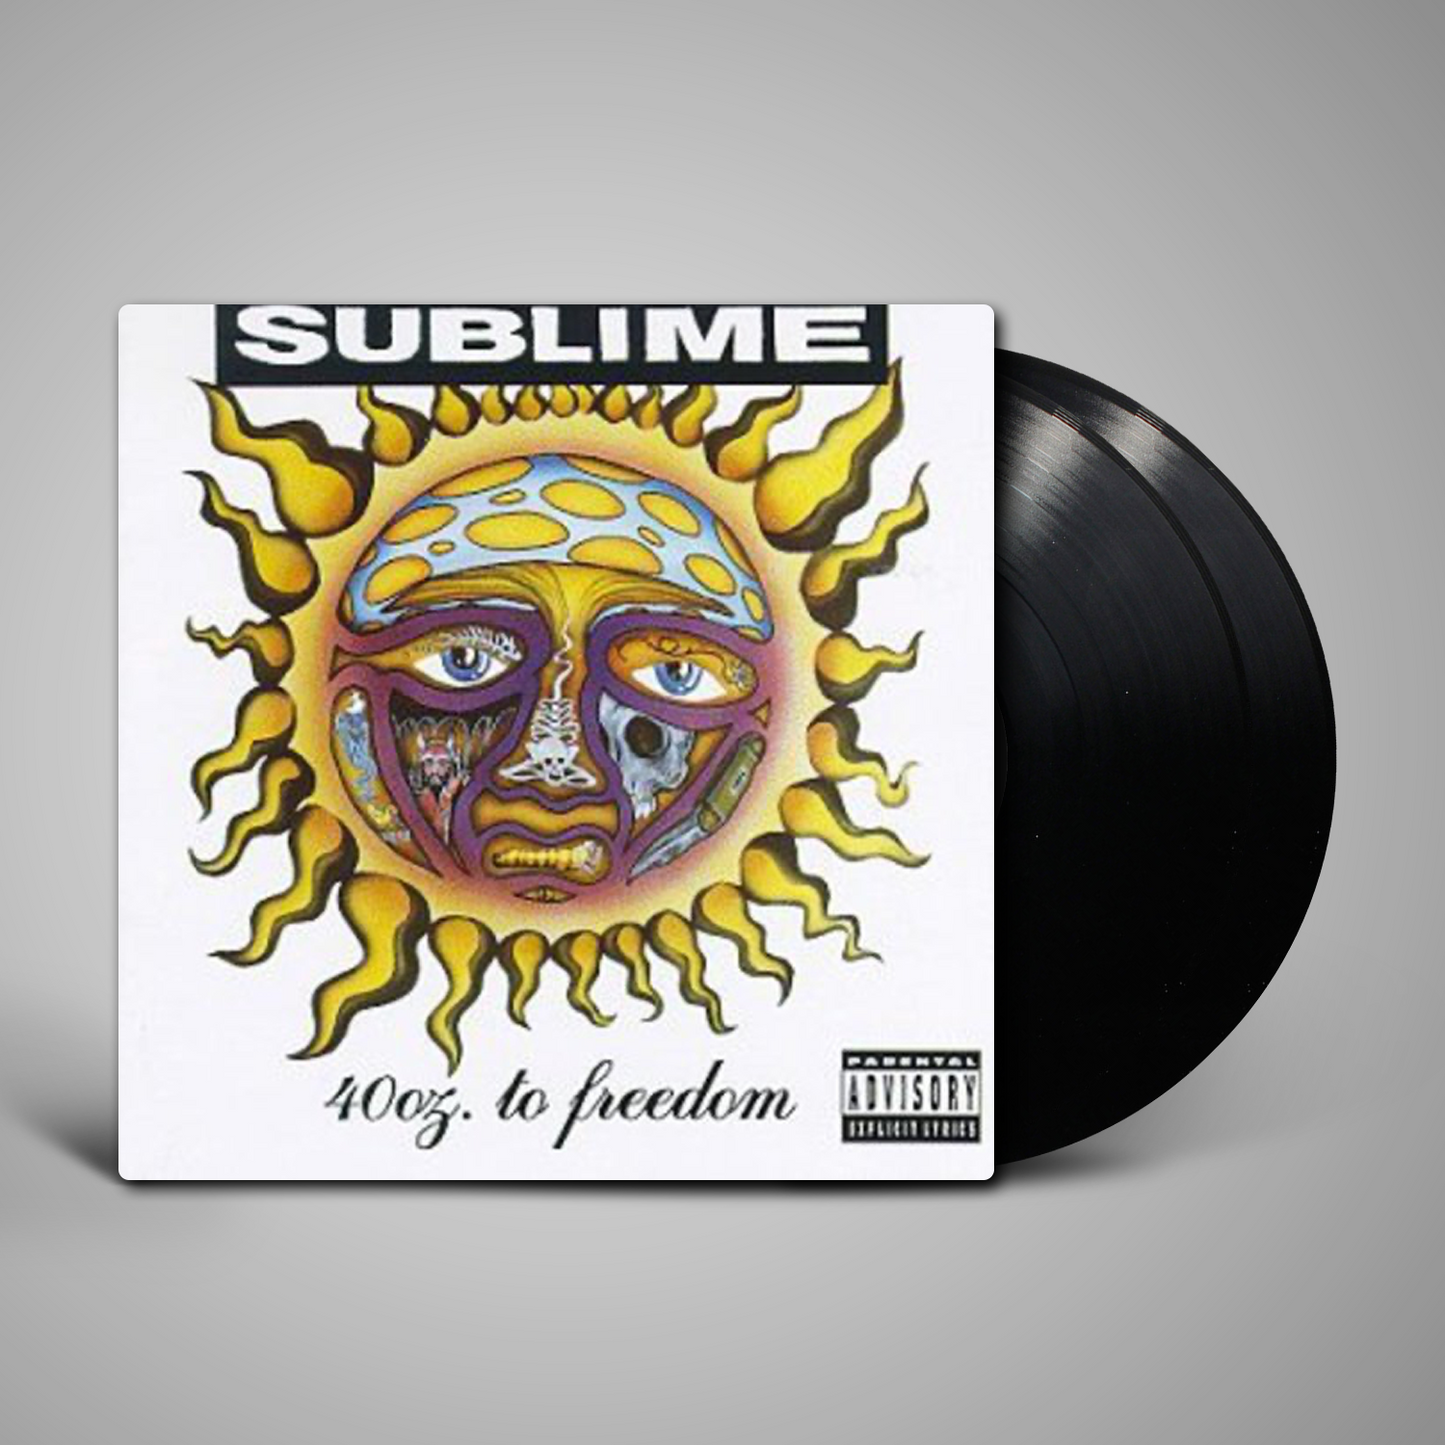 sublime 40 oz to freedom vinyl